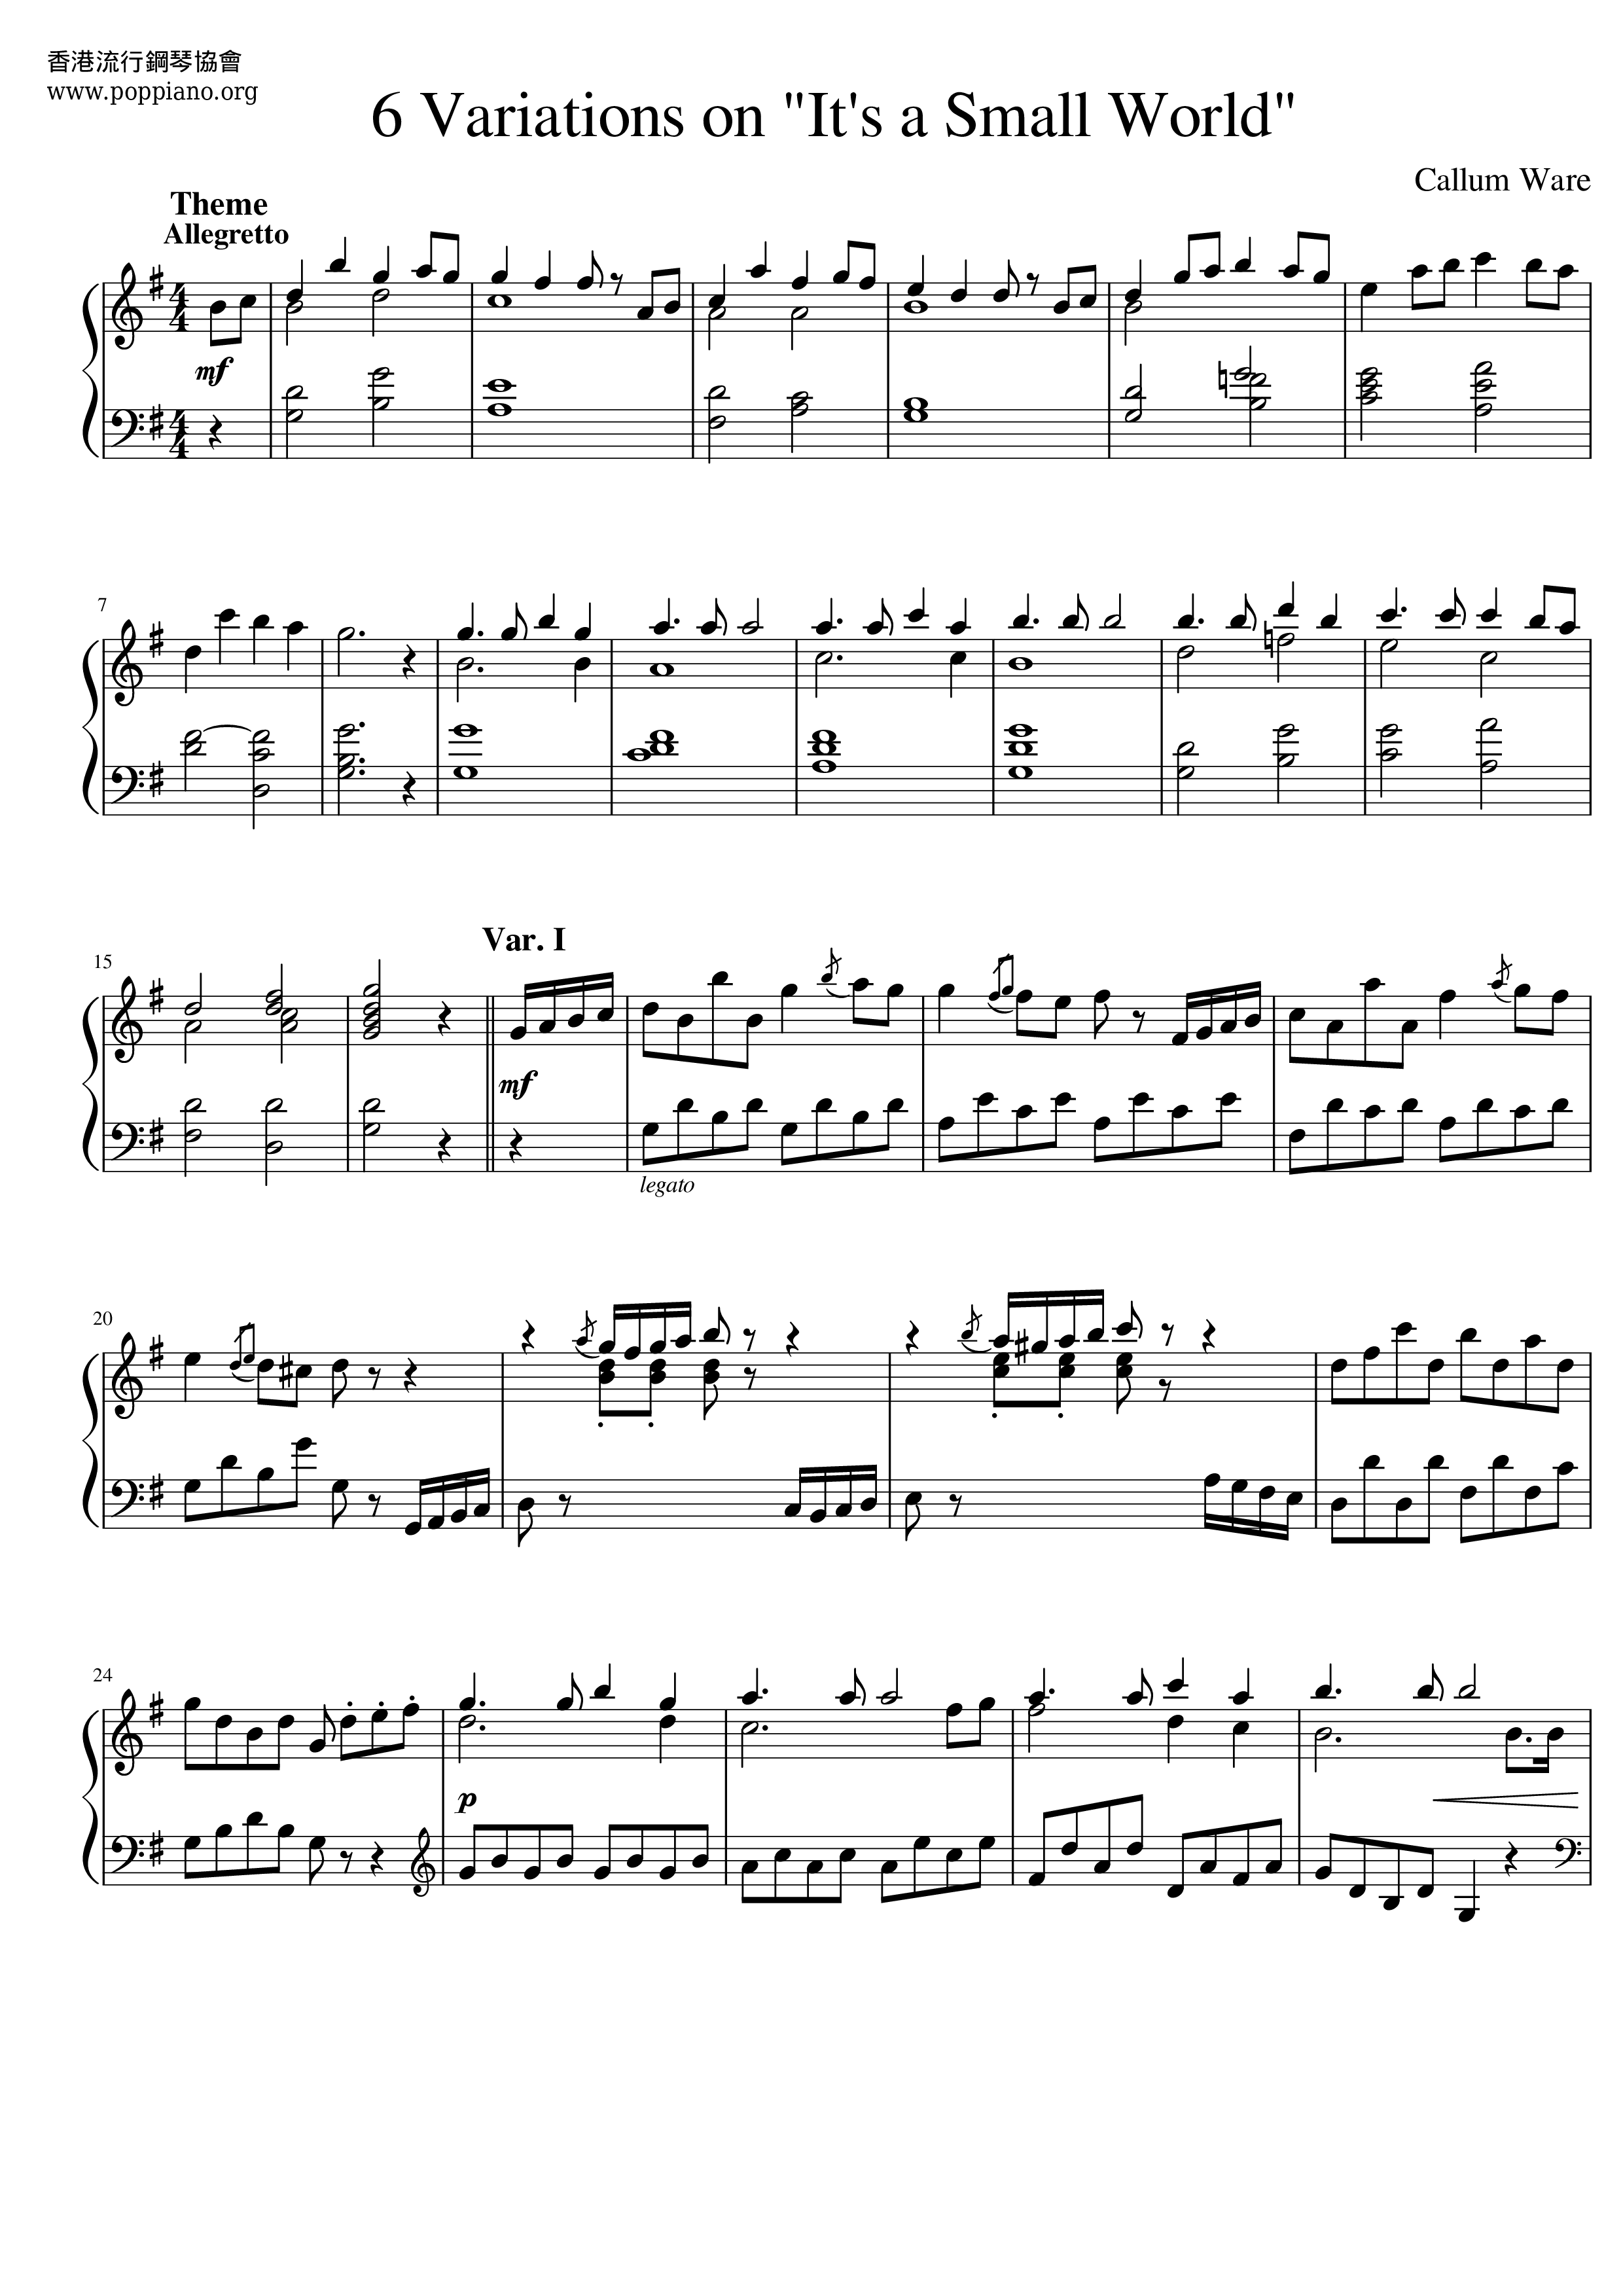 世界真細小 6 Variations Score